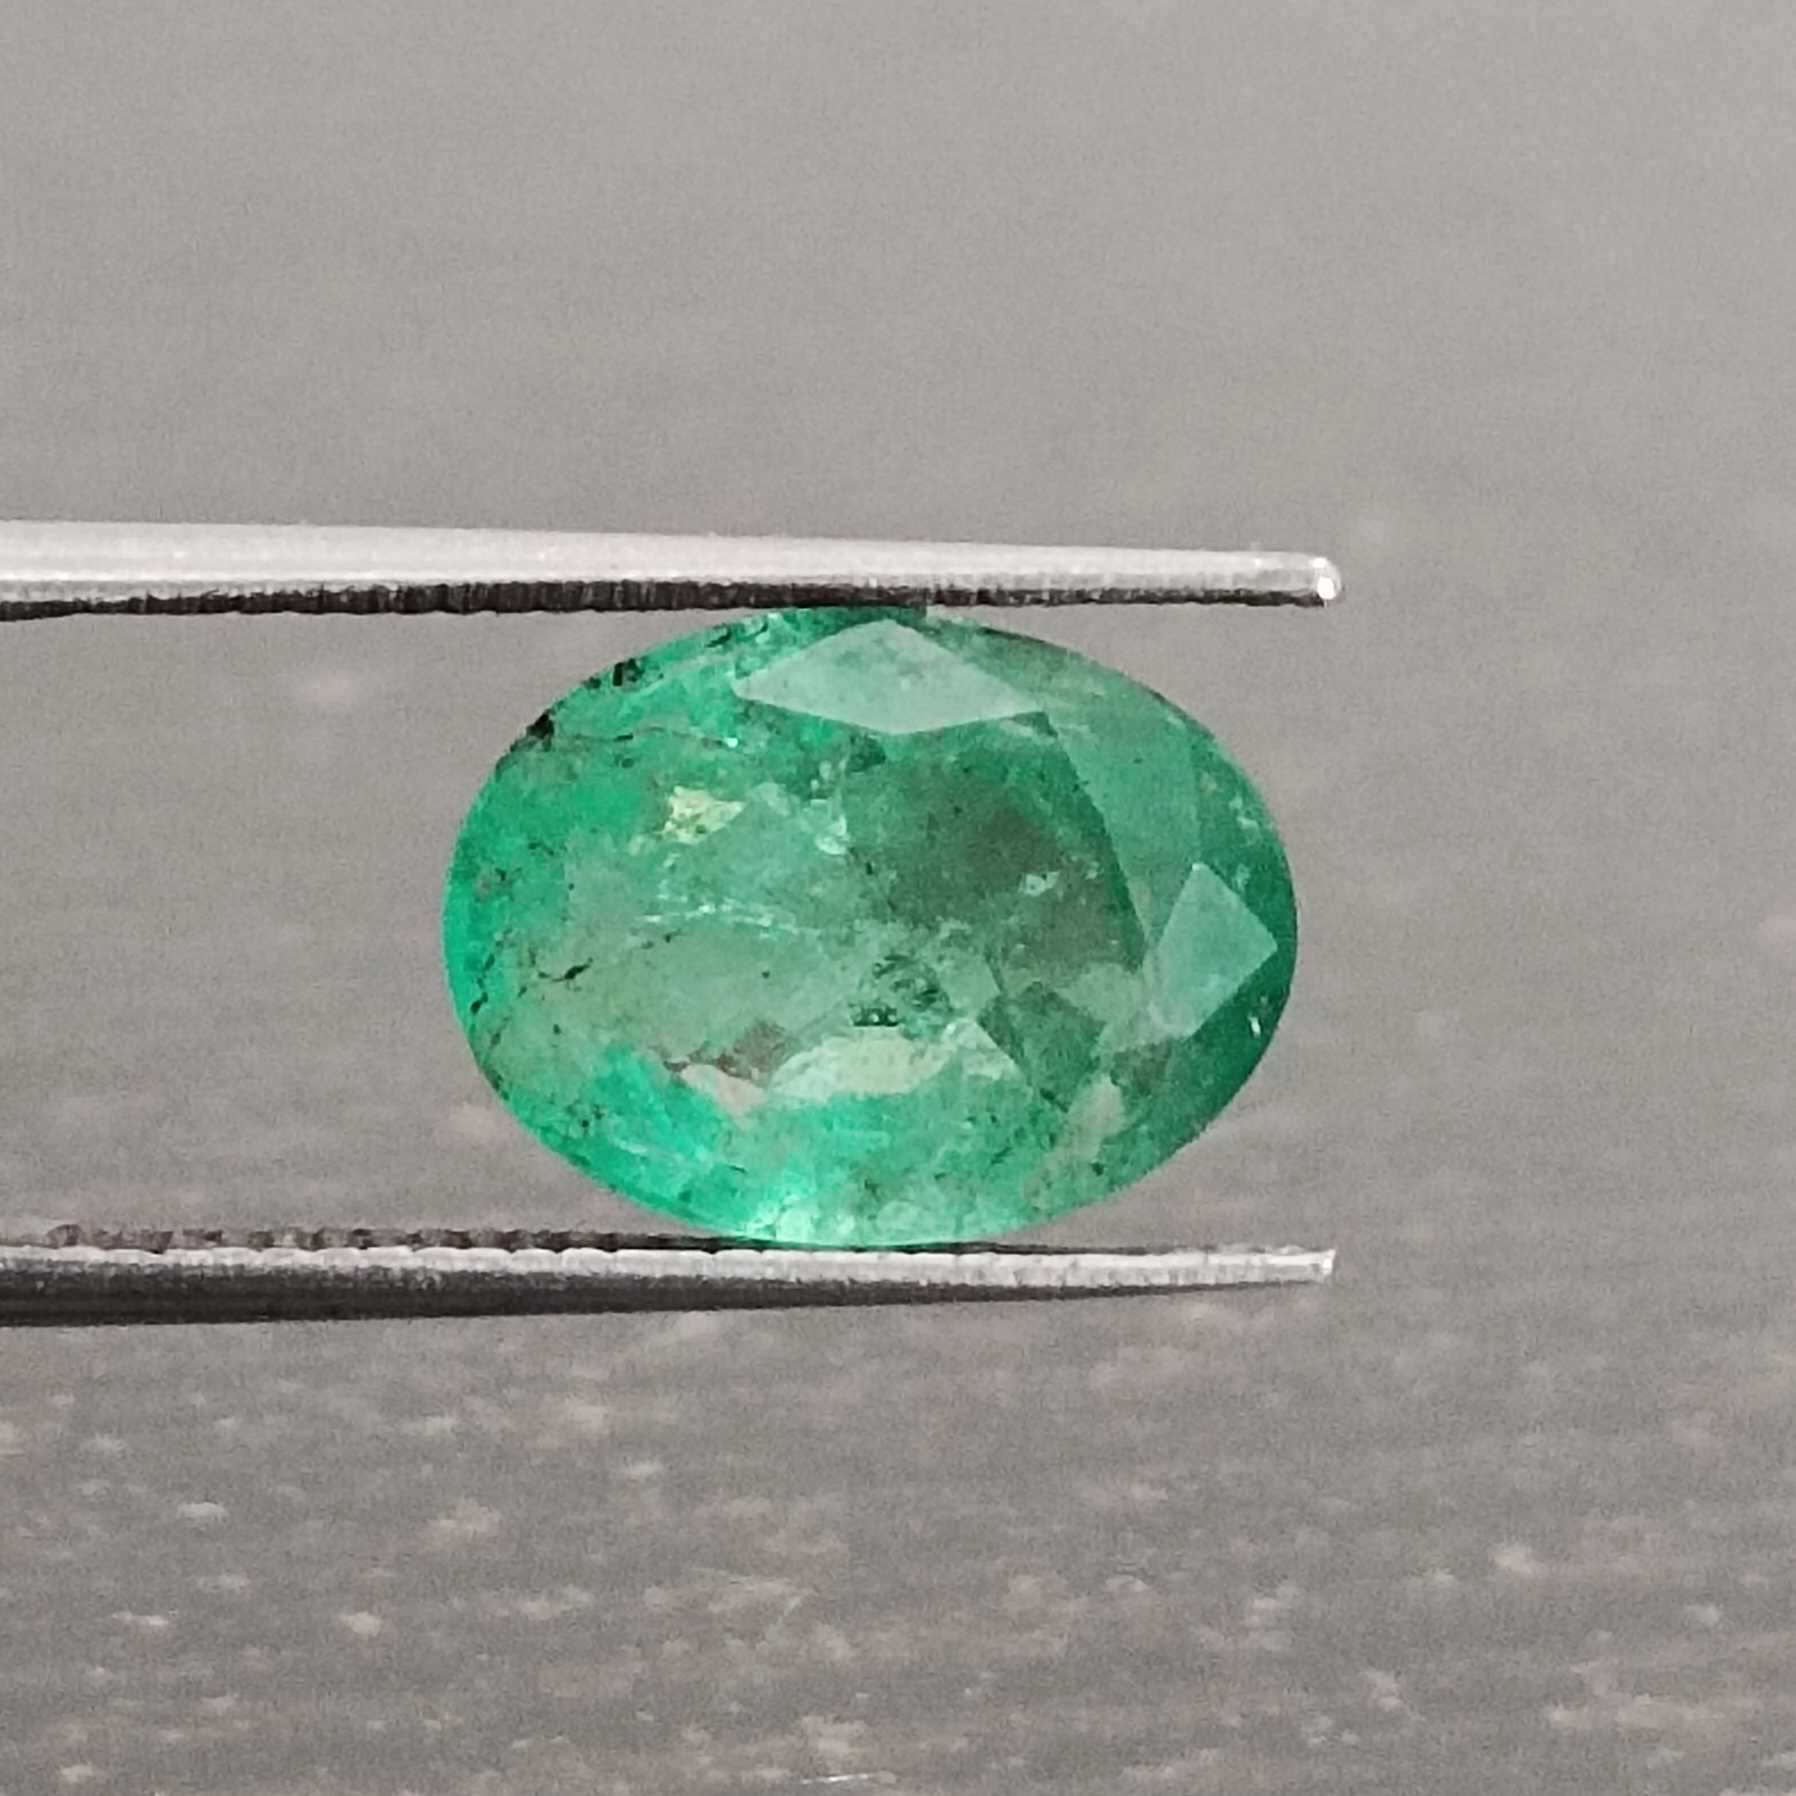 2.78ct vivid green oval cut Colombian emerald/